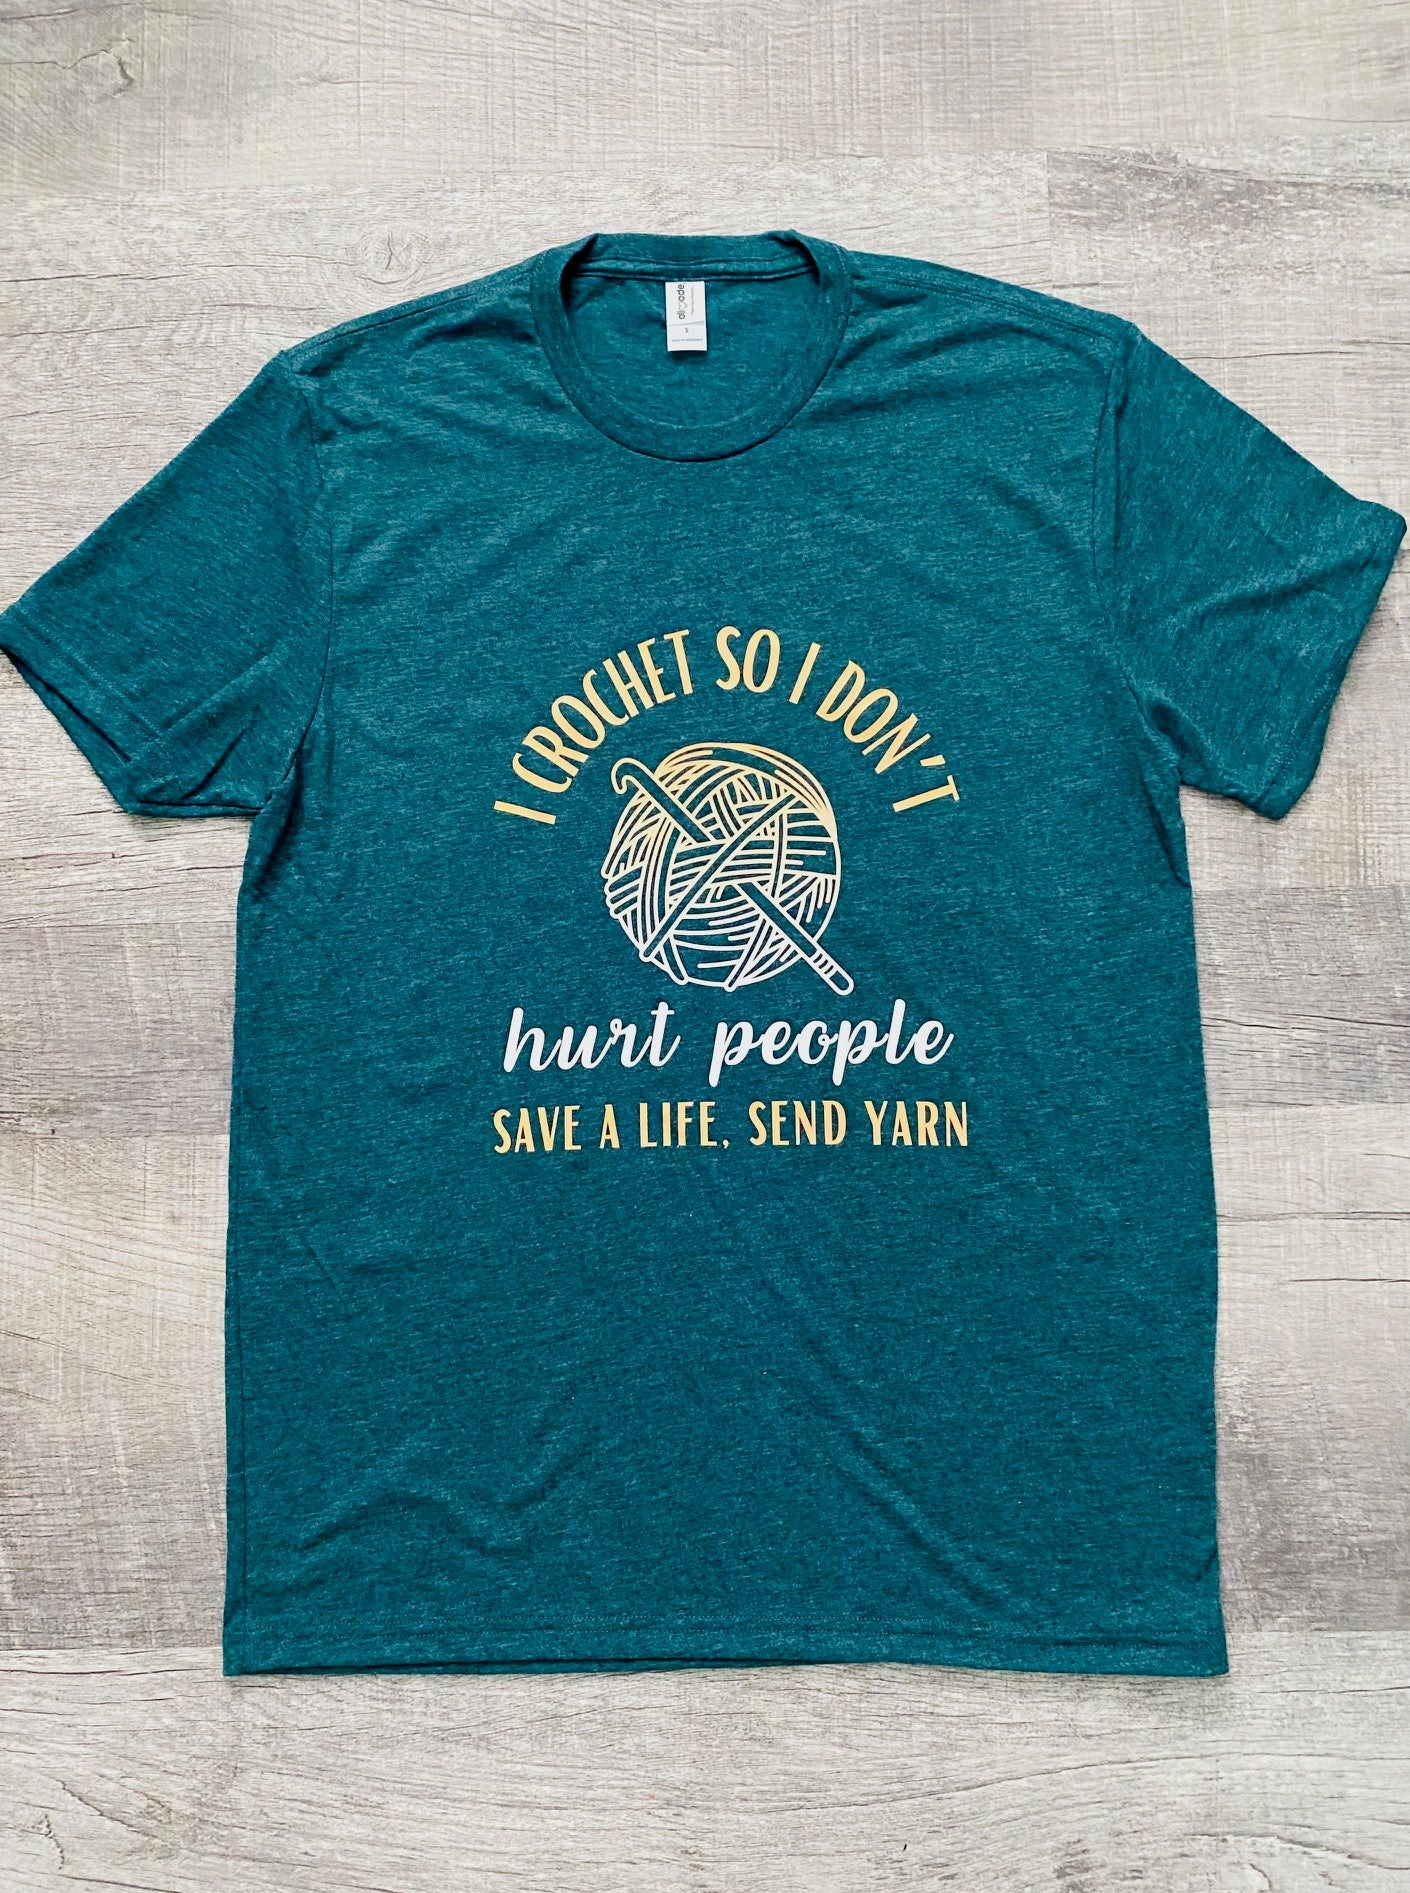 I Crochet So I Don't Hurt People on Sea Green T-Shirt